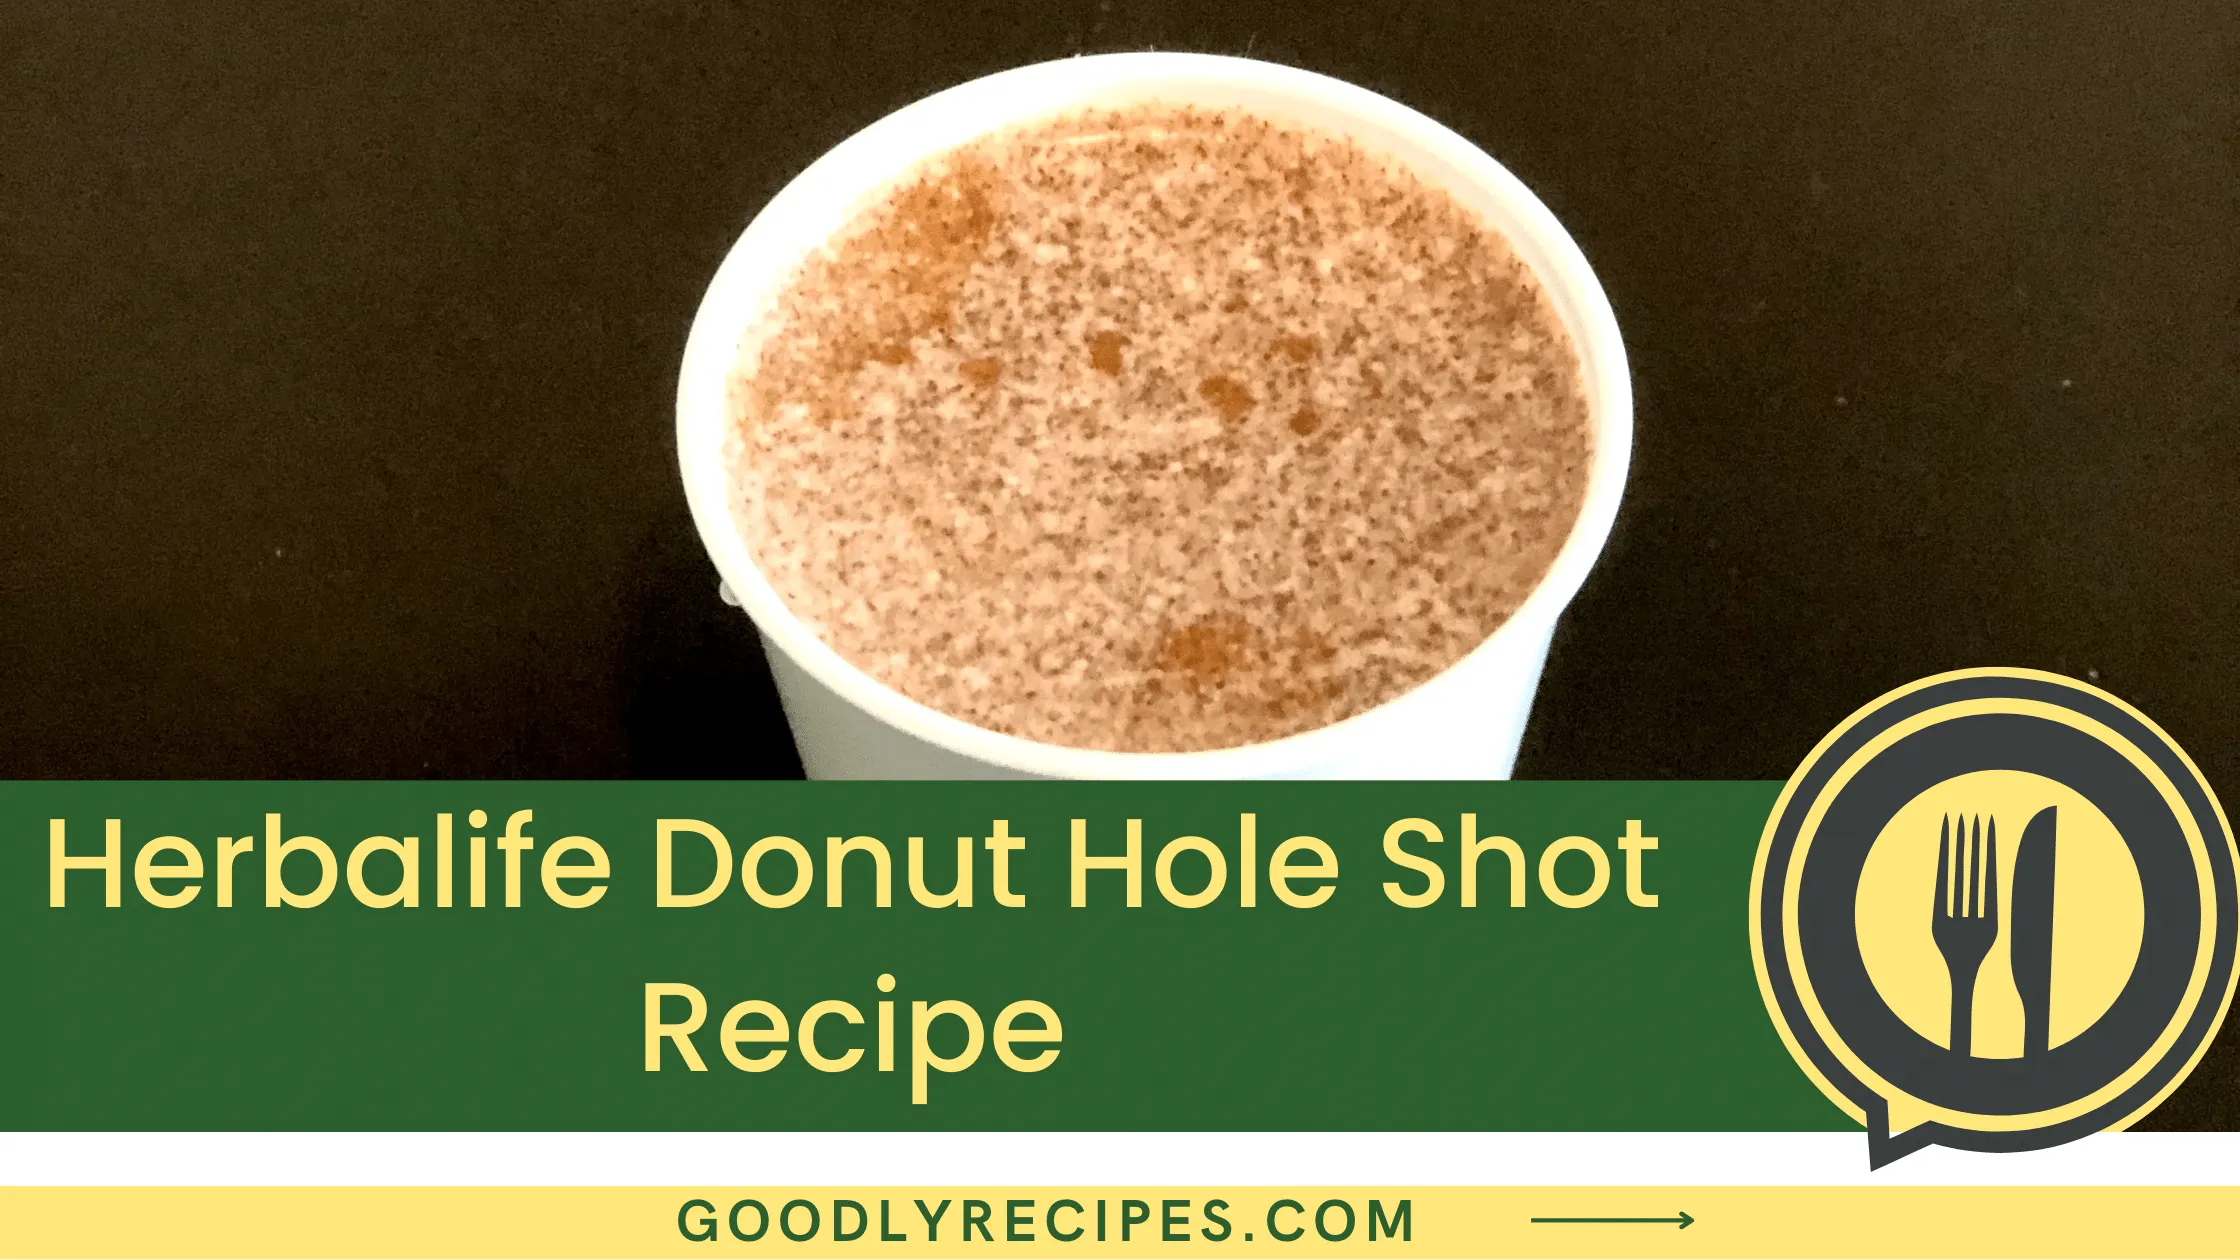 Herbalife Donut Hole Shot Recipe